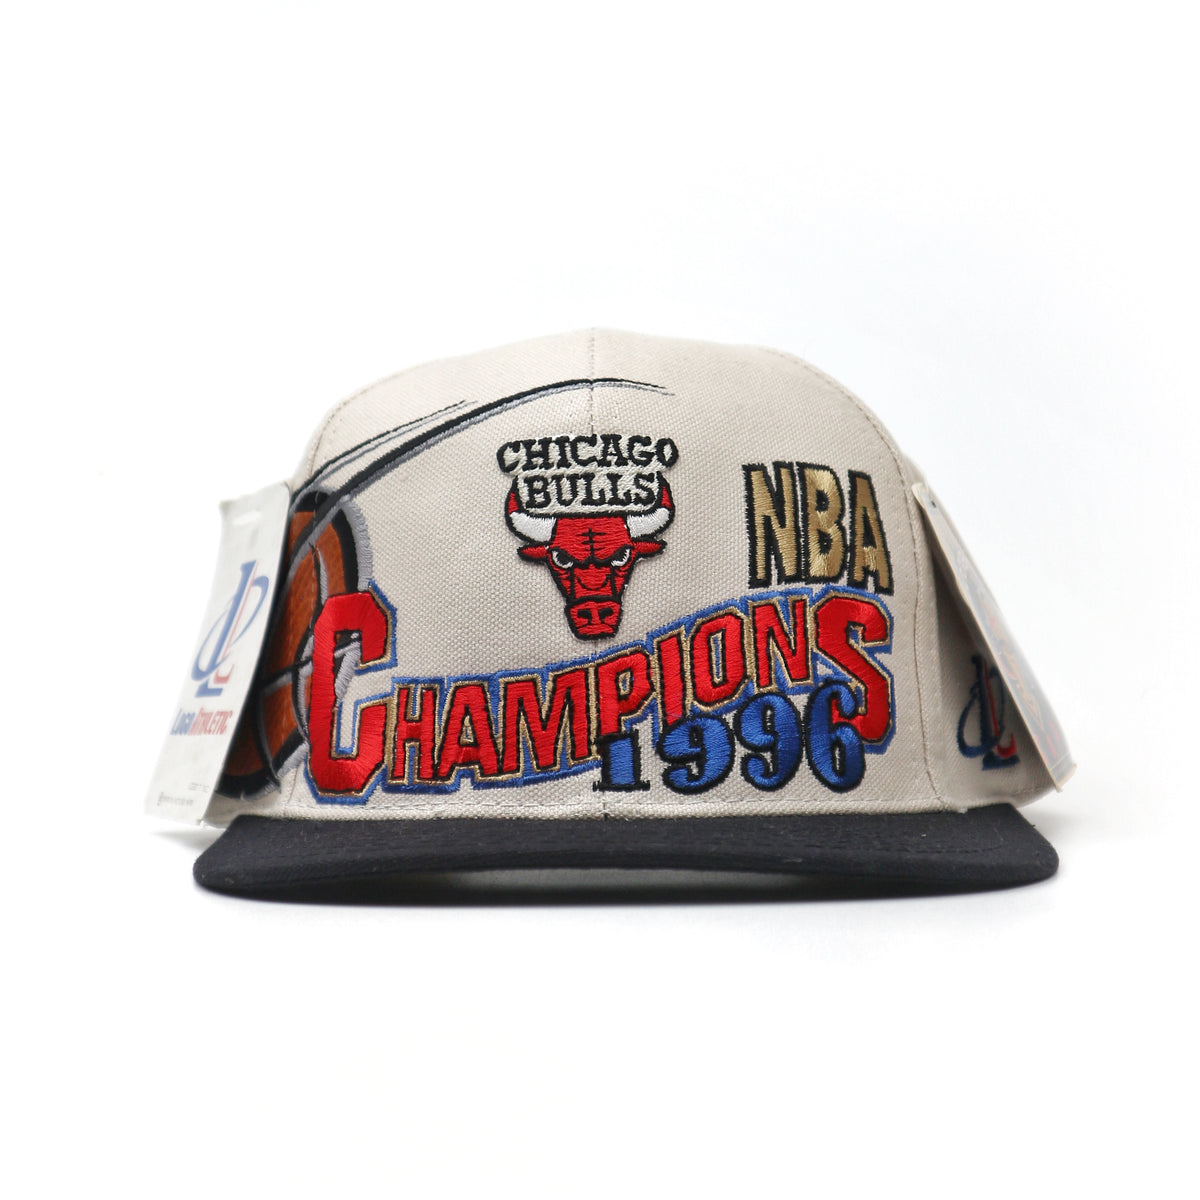 Vintage 1996 Chicago Bulls Eastern Conference Finals Champs Snapback